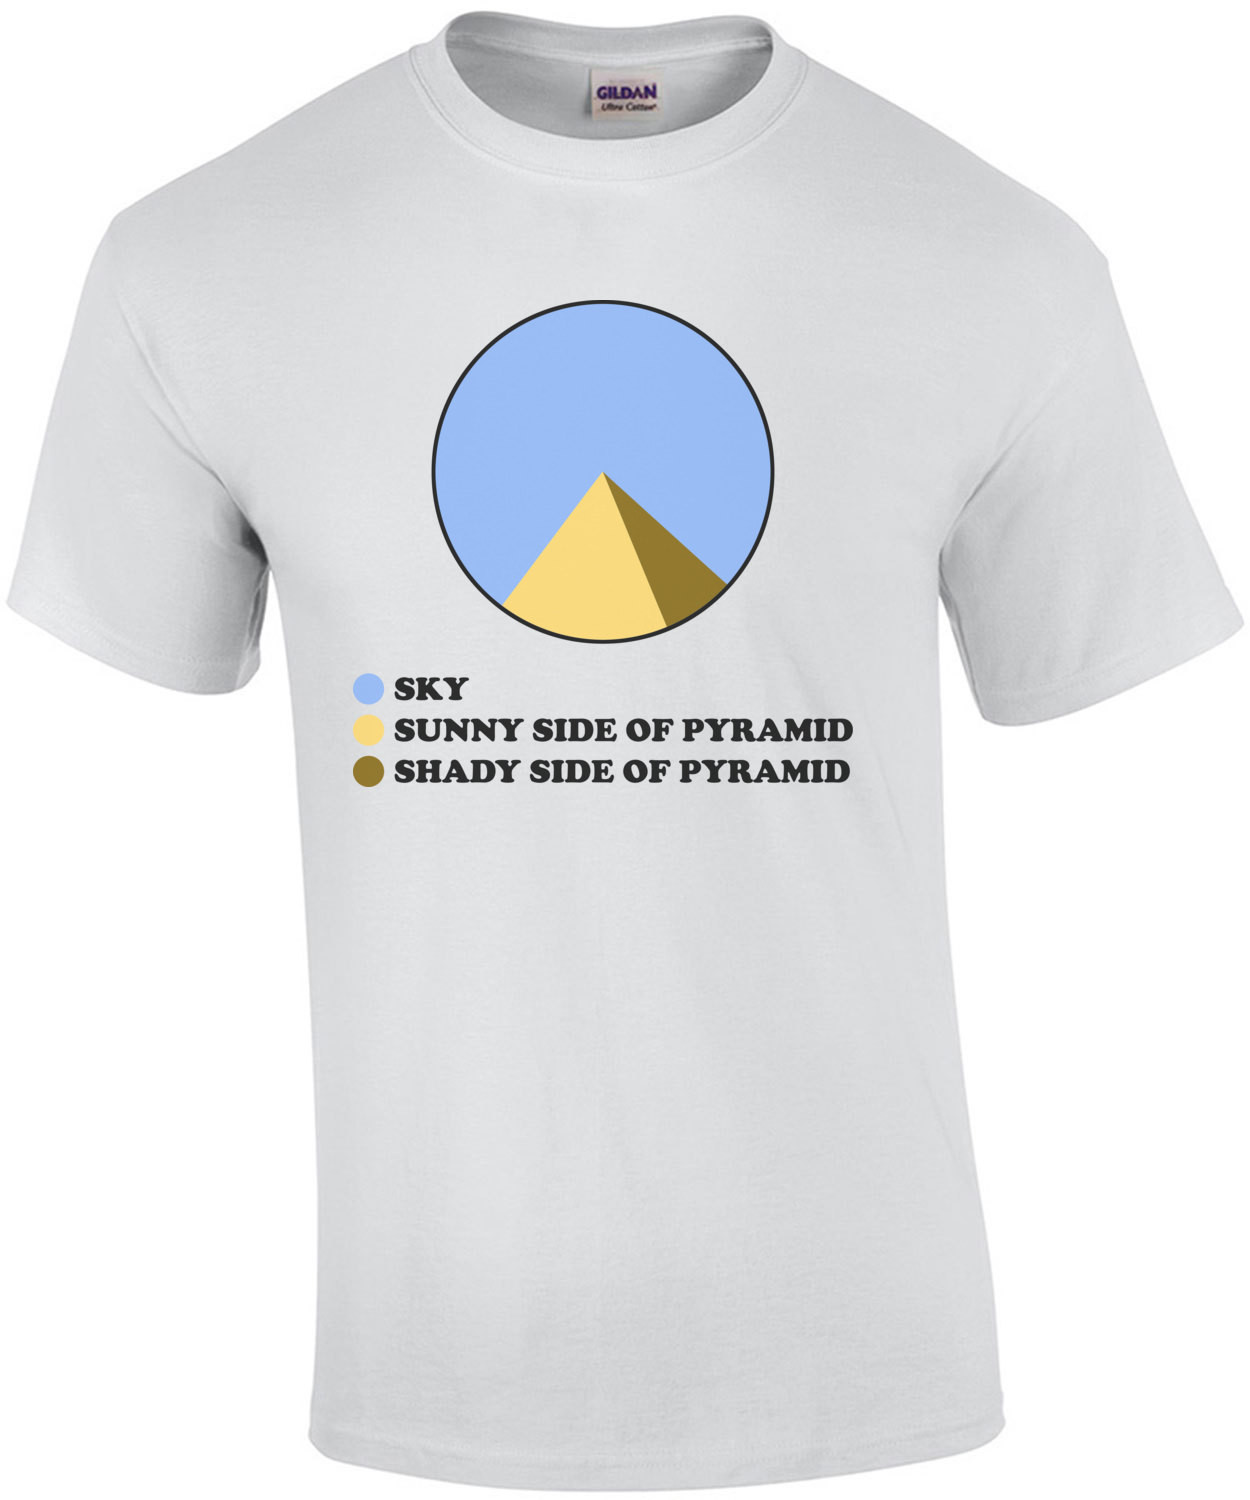 Pyramid Pie Chart Shirt